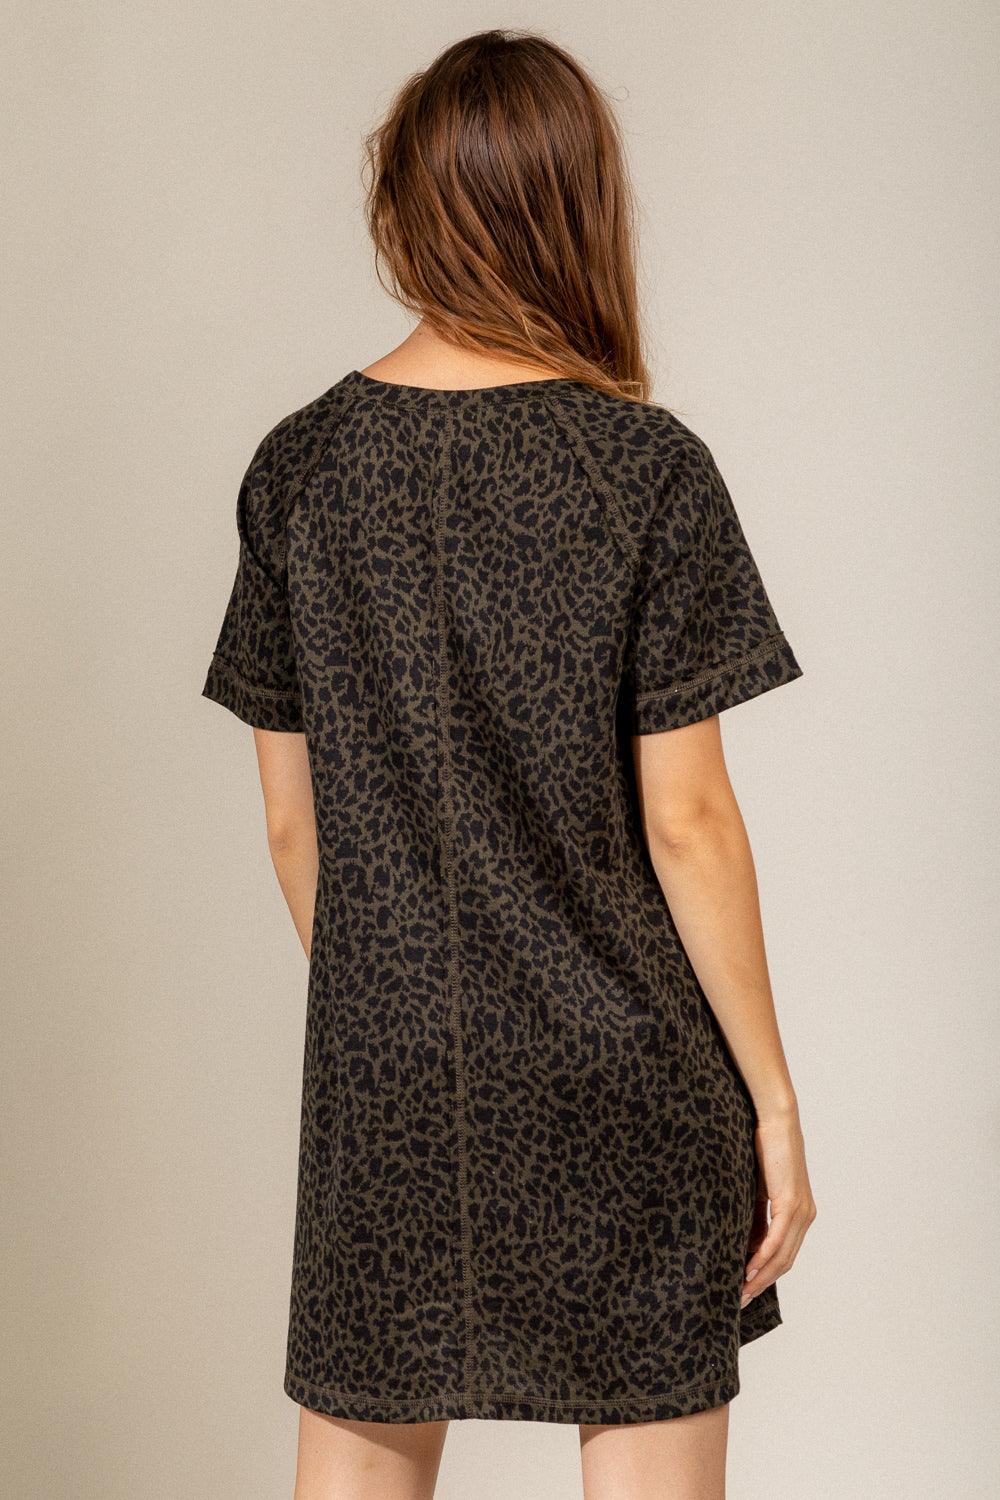 Charcoal Leopard Print Shirt Dress - Strawberry Moon Boutique